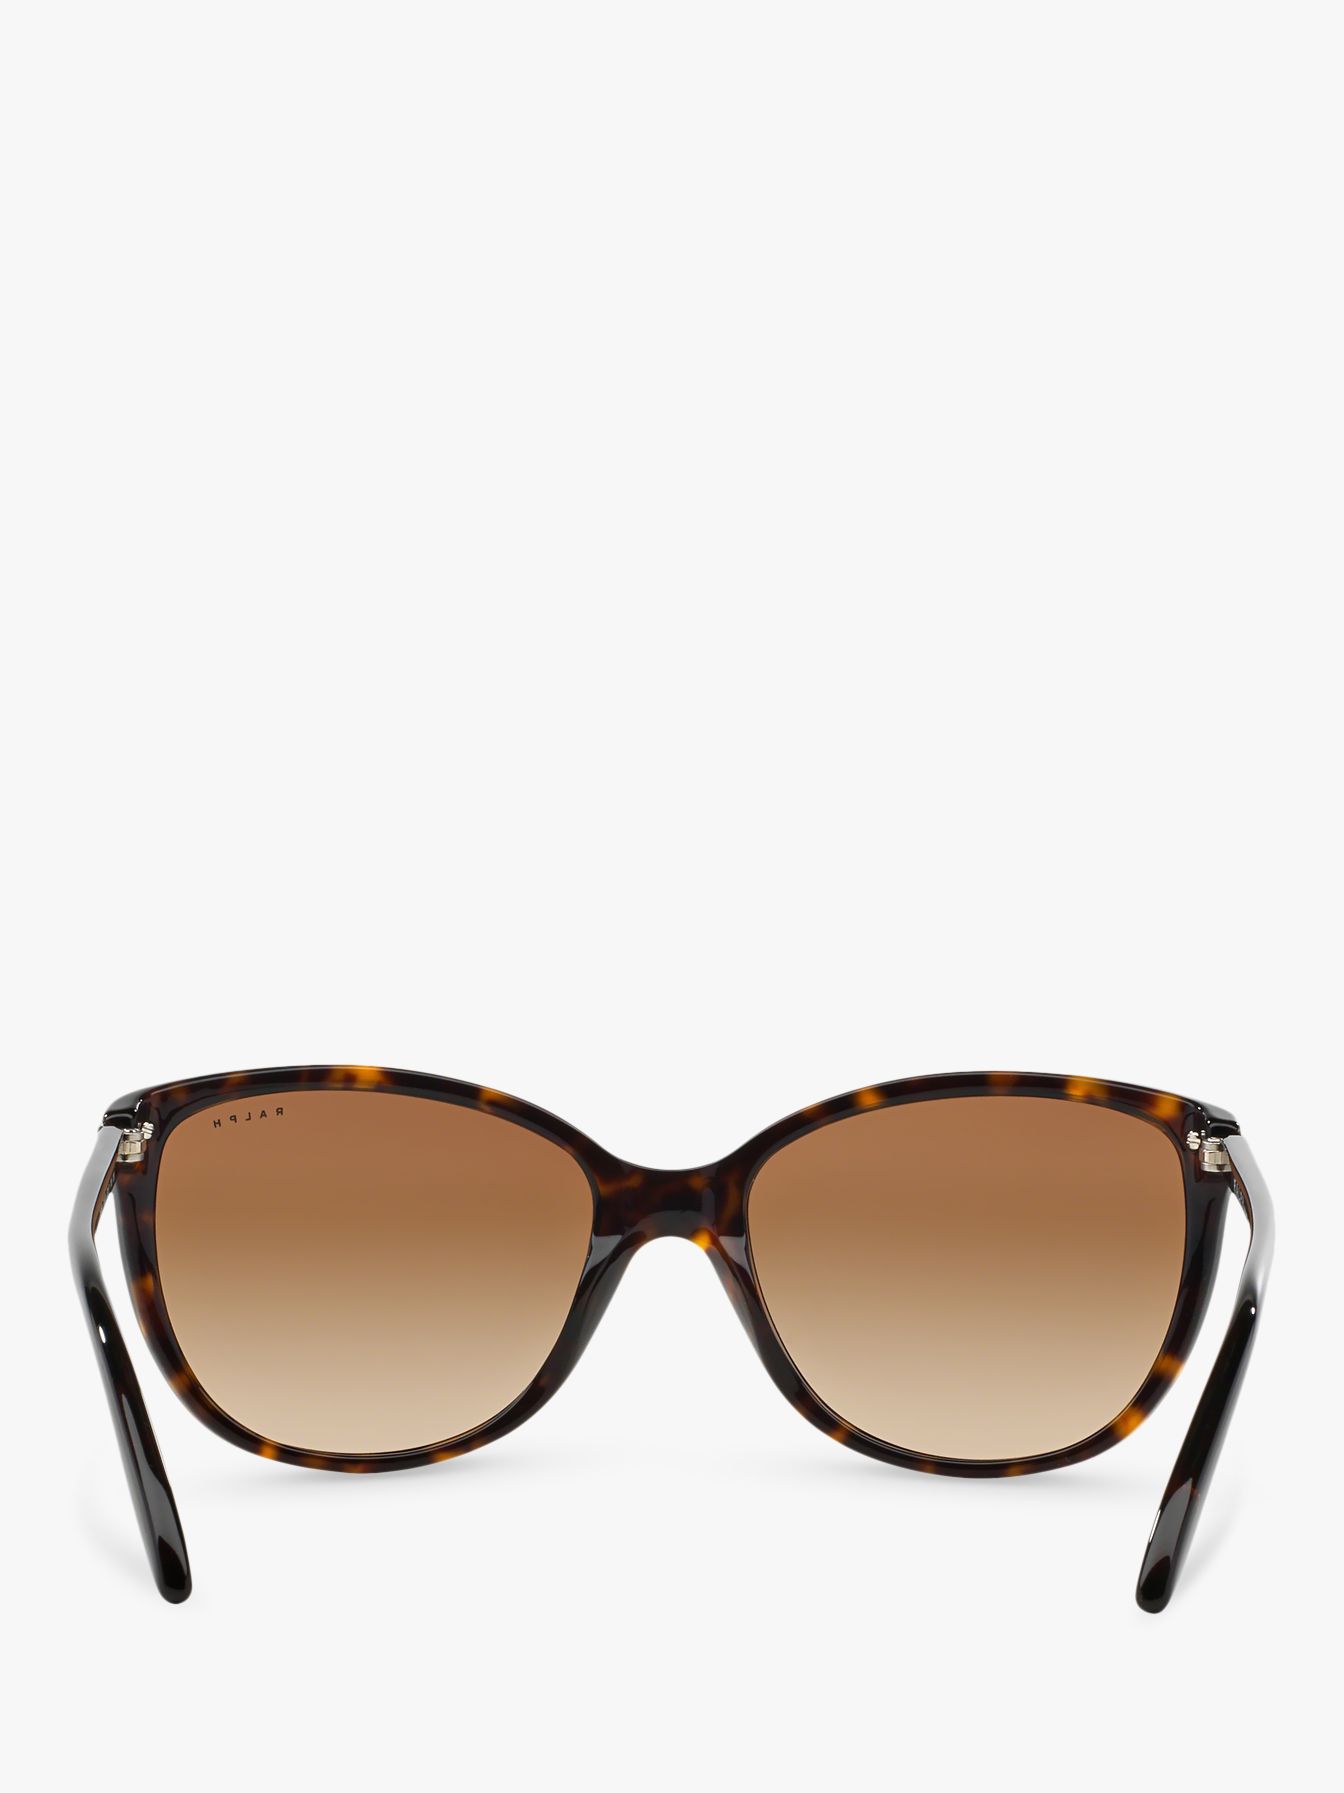 Polo Ralph Lauren RA5160 Women's Cat's Eye Sunglasses, Dark Tortoise/Brown  Gradient at John Lewis & Partners